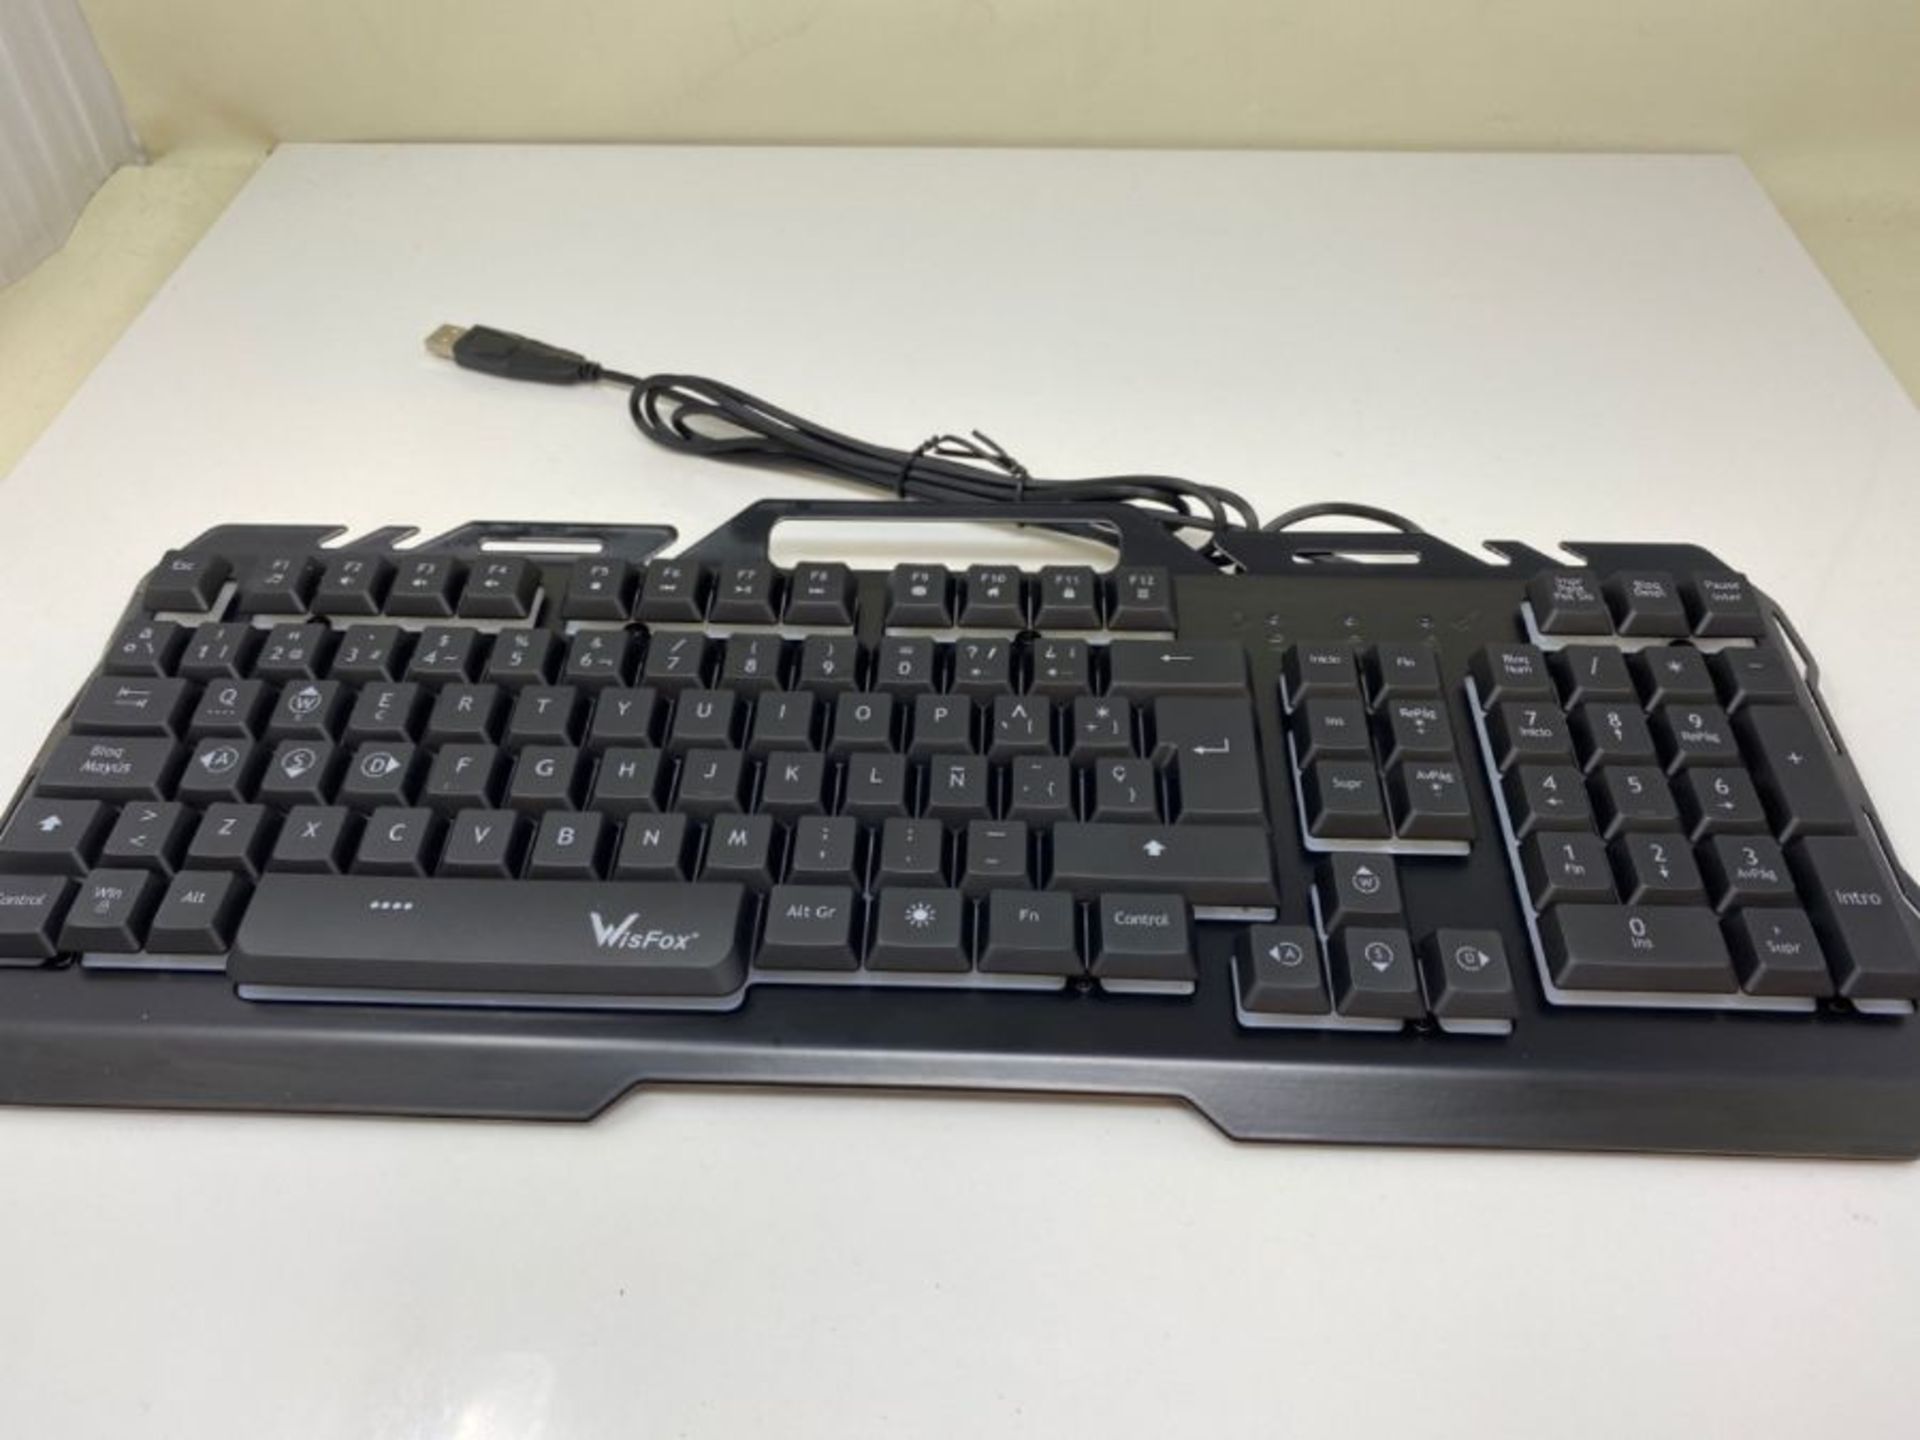 Gaming Keyboard, WisFox Colorful Rainbow LED Backlit USB Wired Keyboard, Ultra-Slim Qu - Image 2 of 2